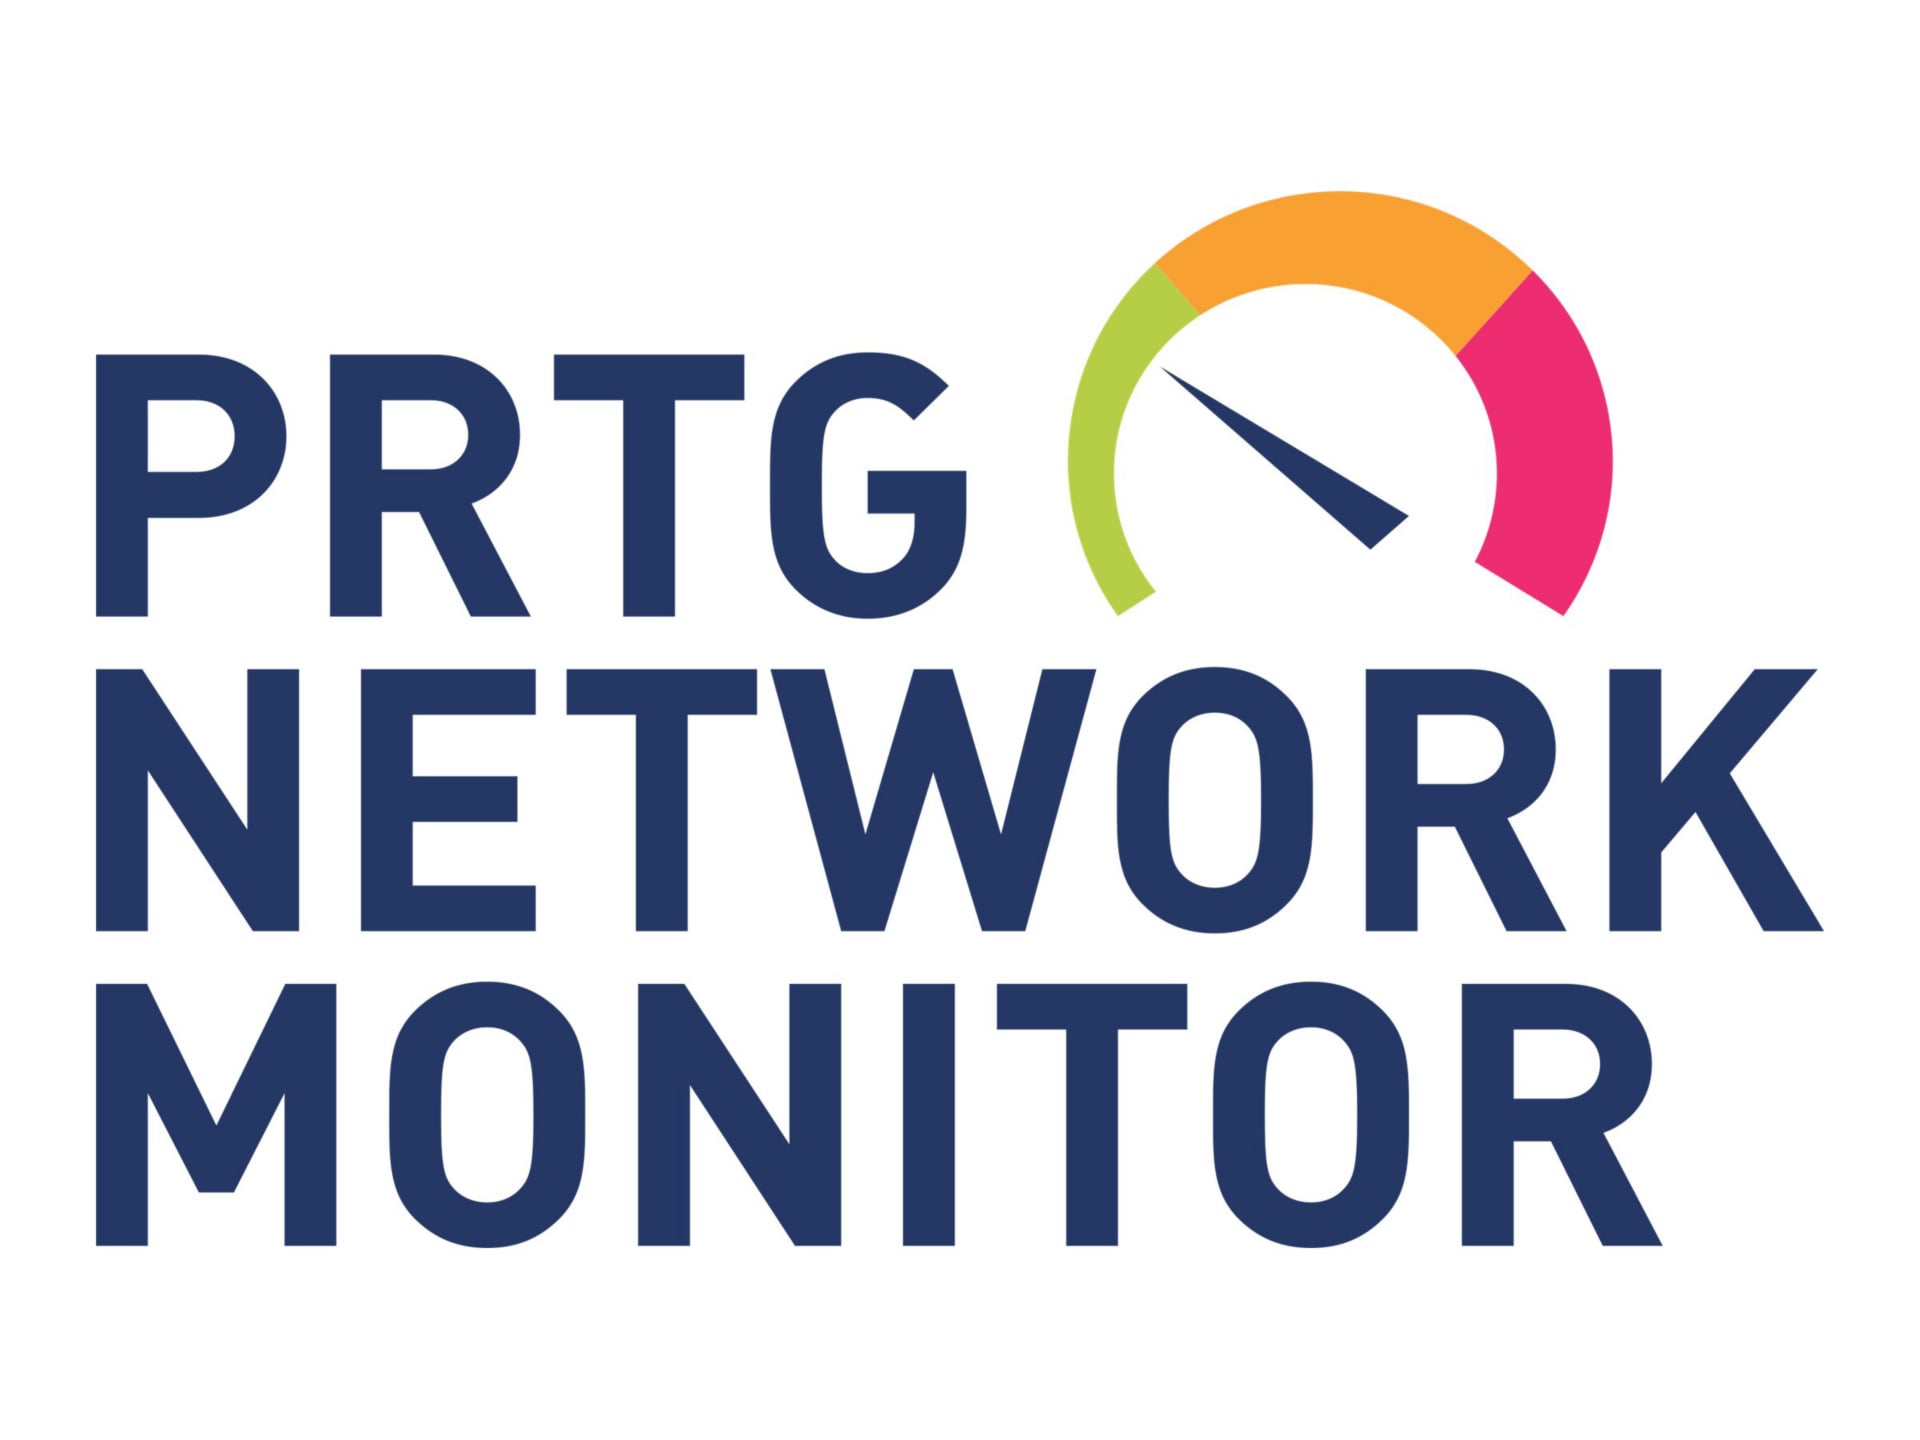 PRTG Network Monitor - upgrade license + Maintenance - 1000 sensors